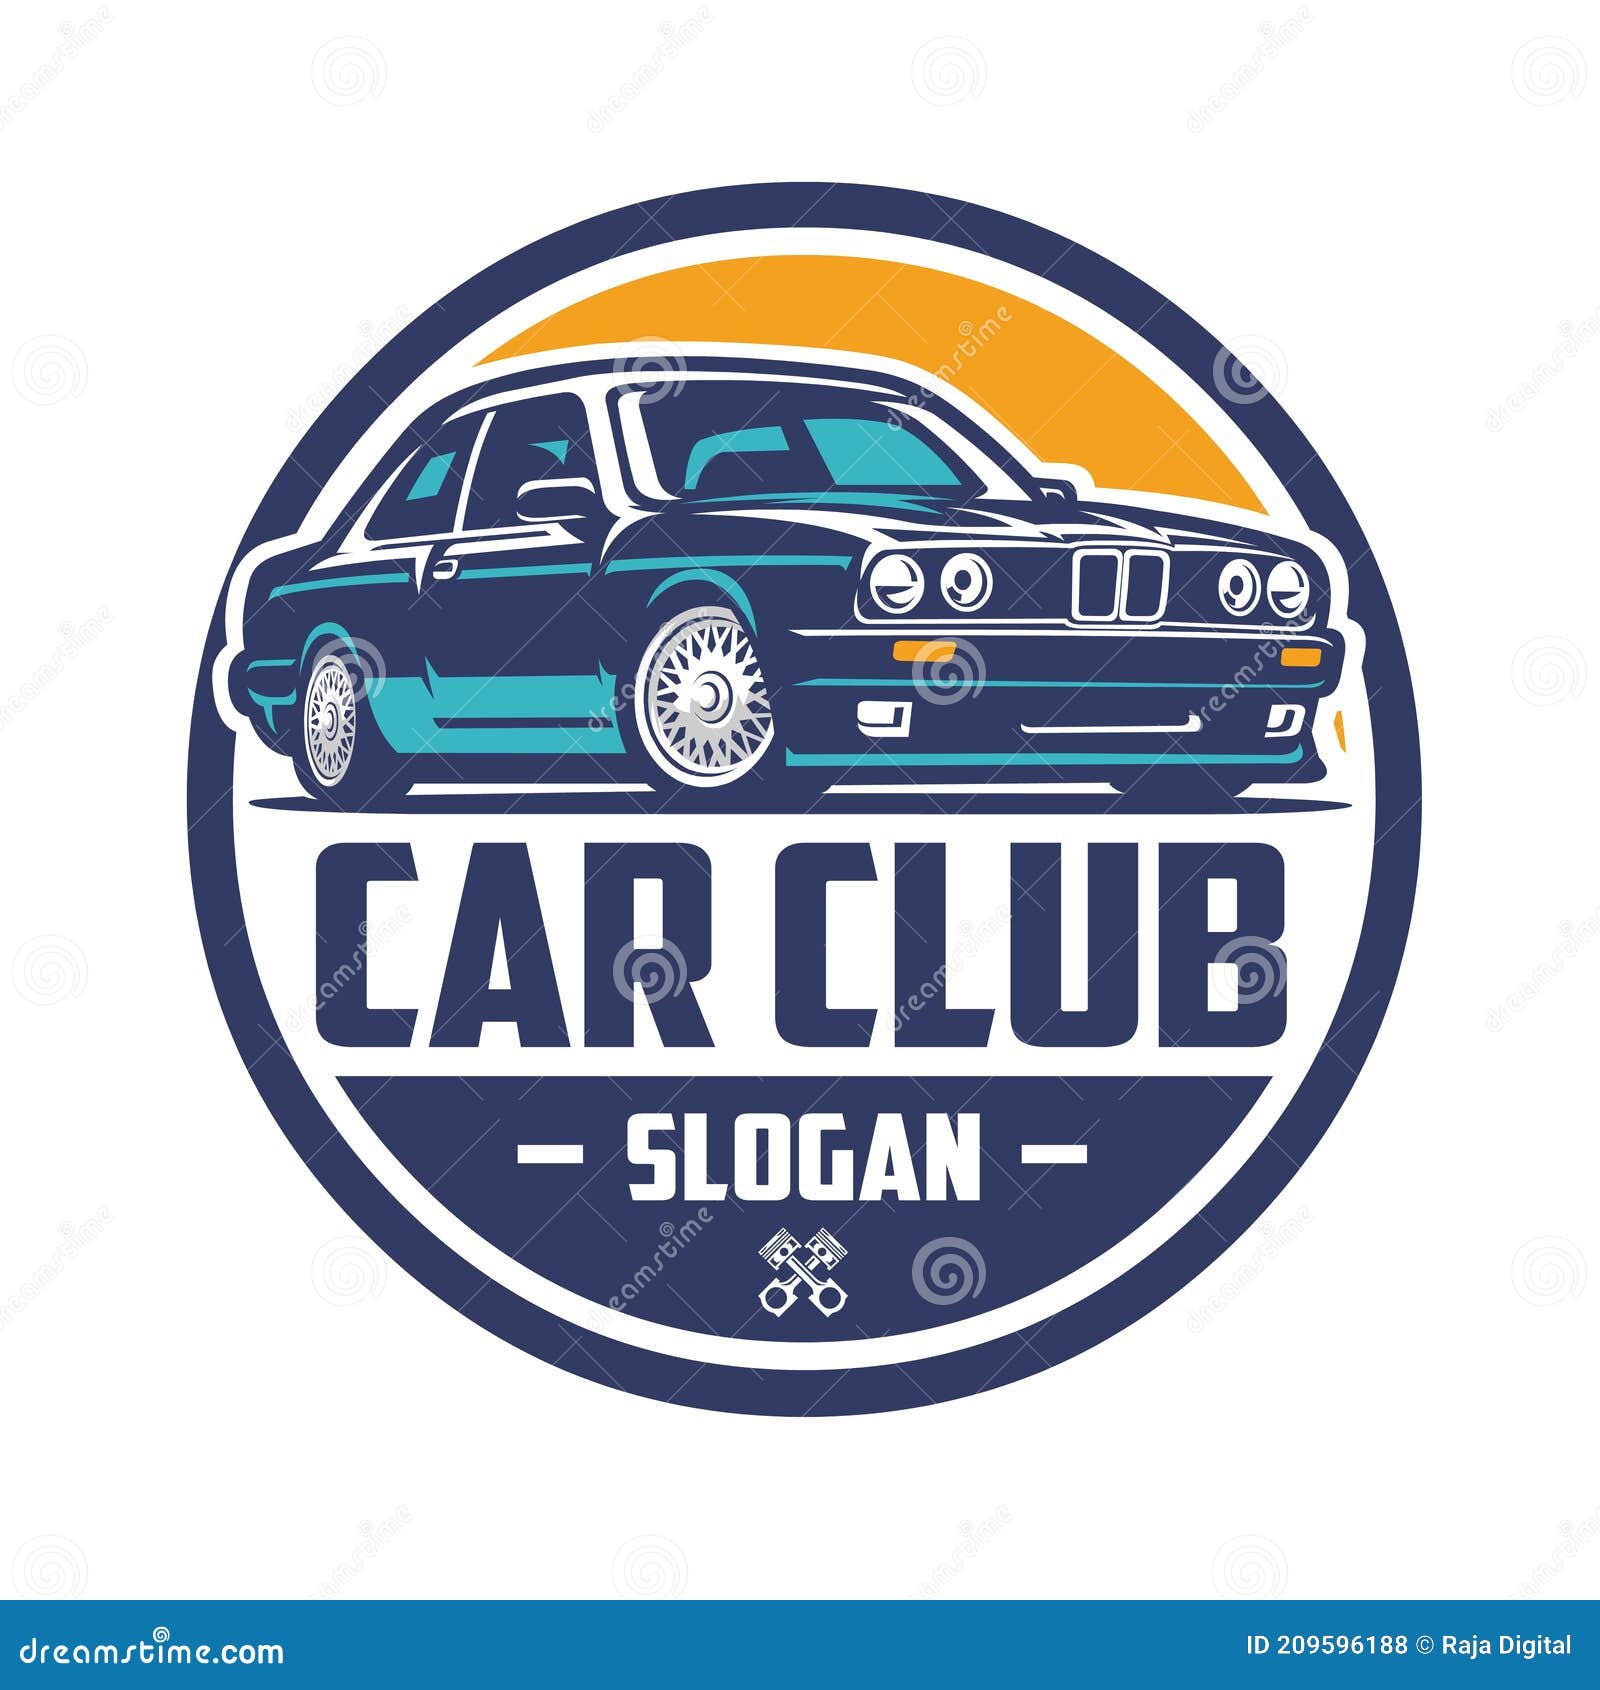 Total 98+ imagen club de carros logos